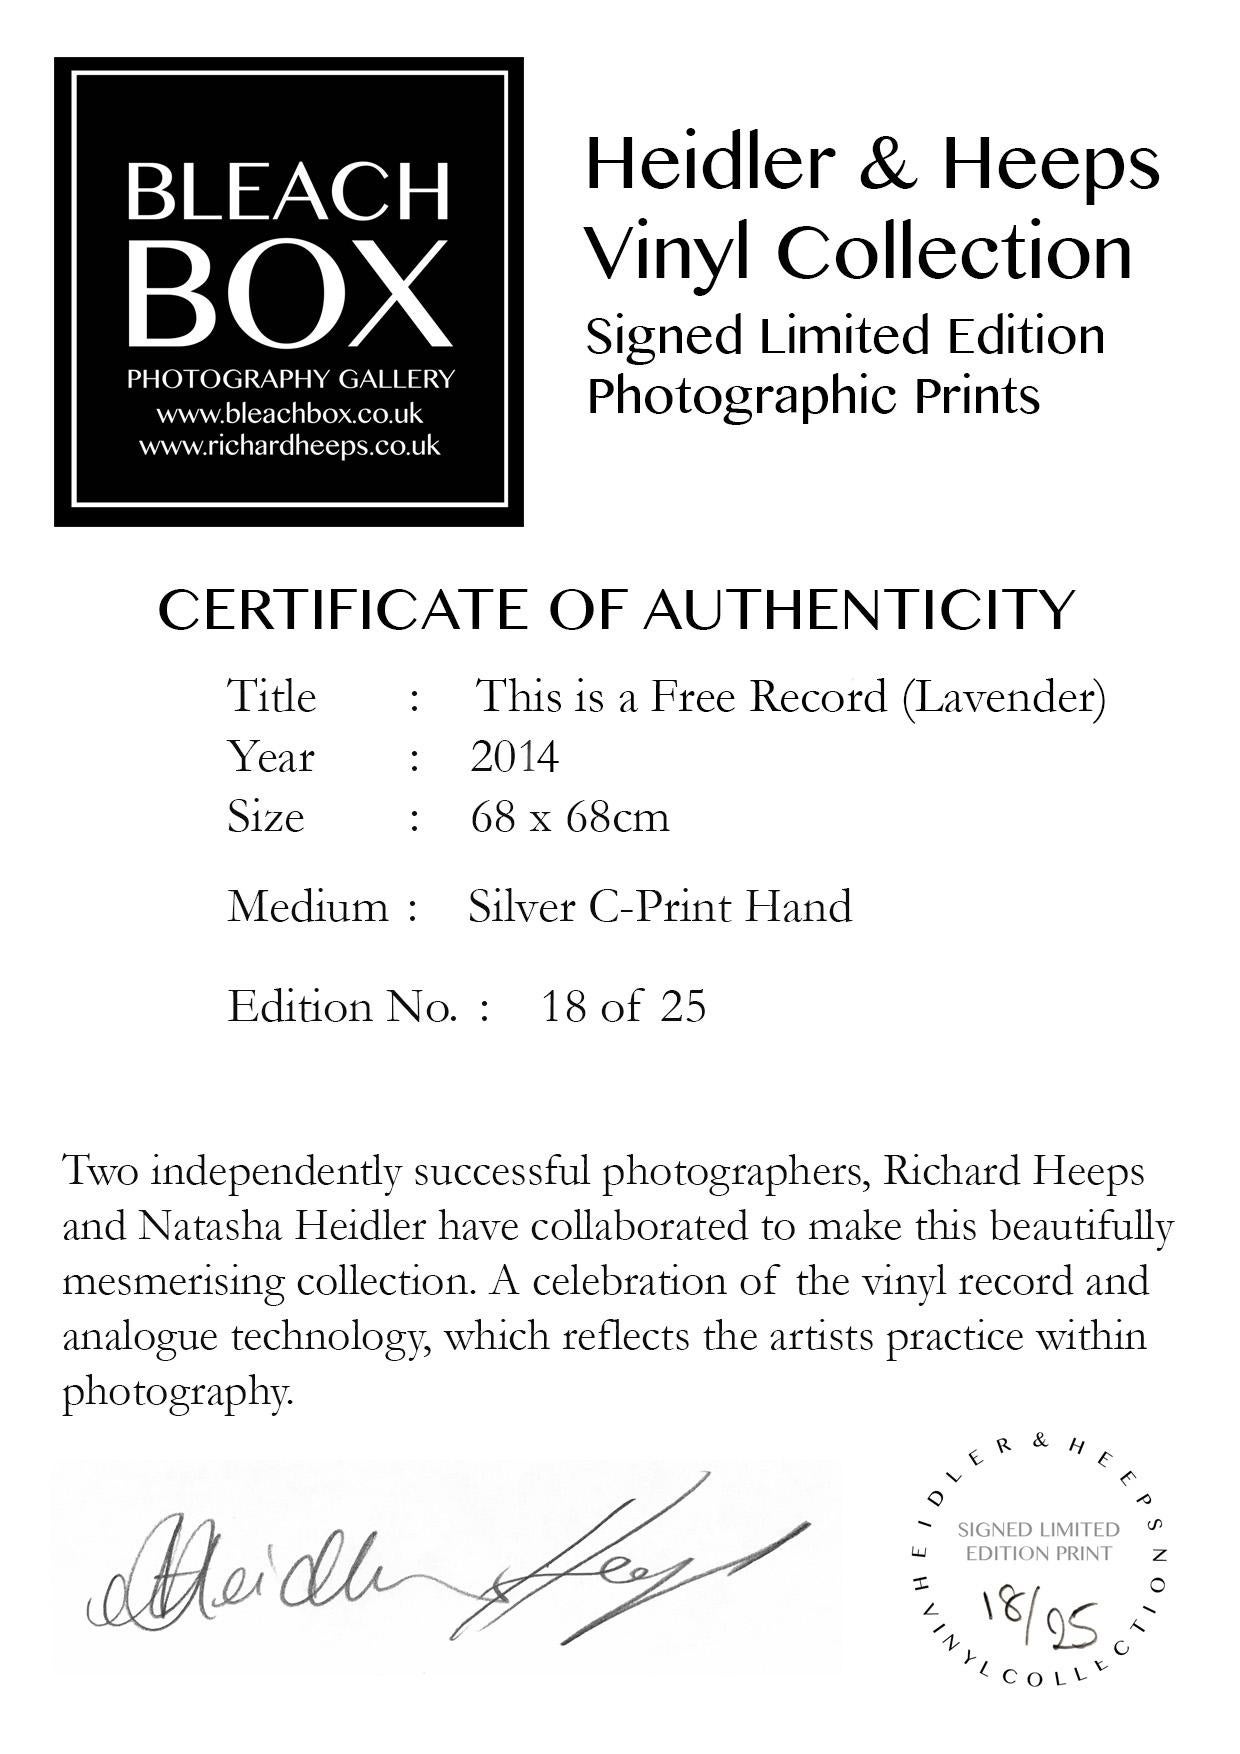 Collection Vinyl, This is a Free Record (Lavender) - Photographie conceptuelle - Violet Print par Heidler & Heeps